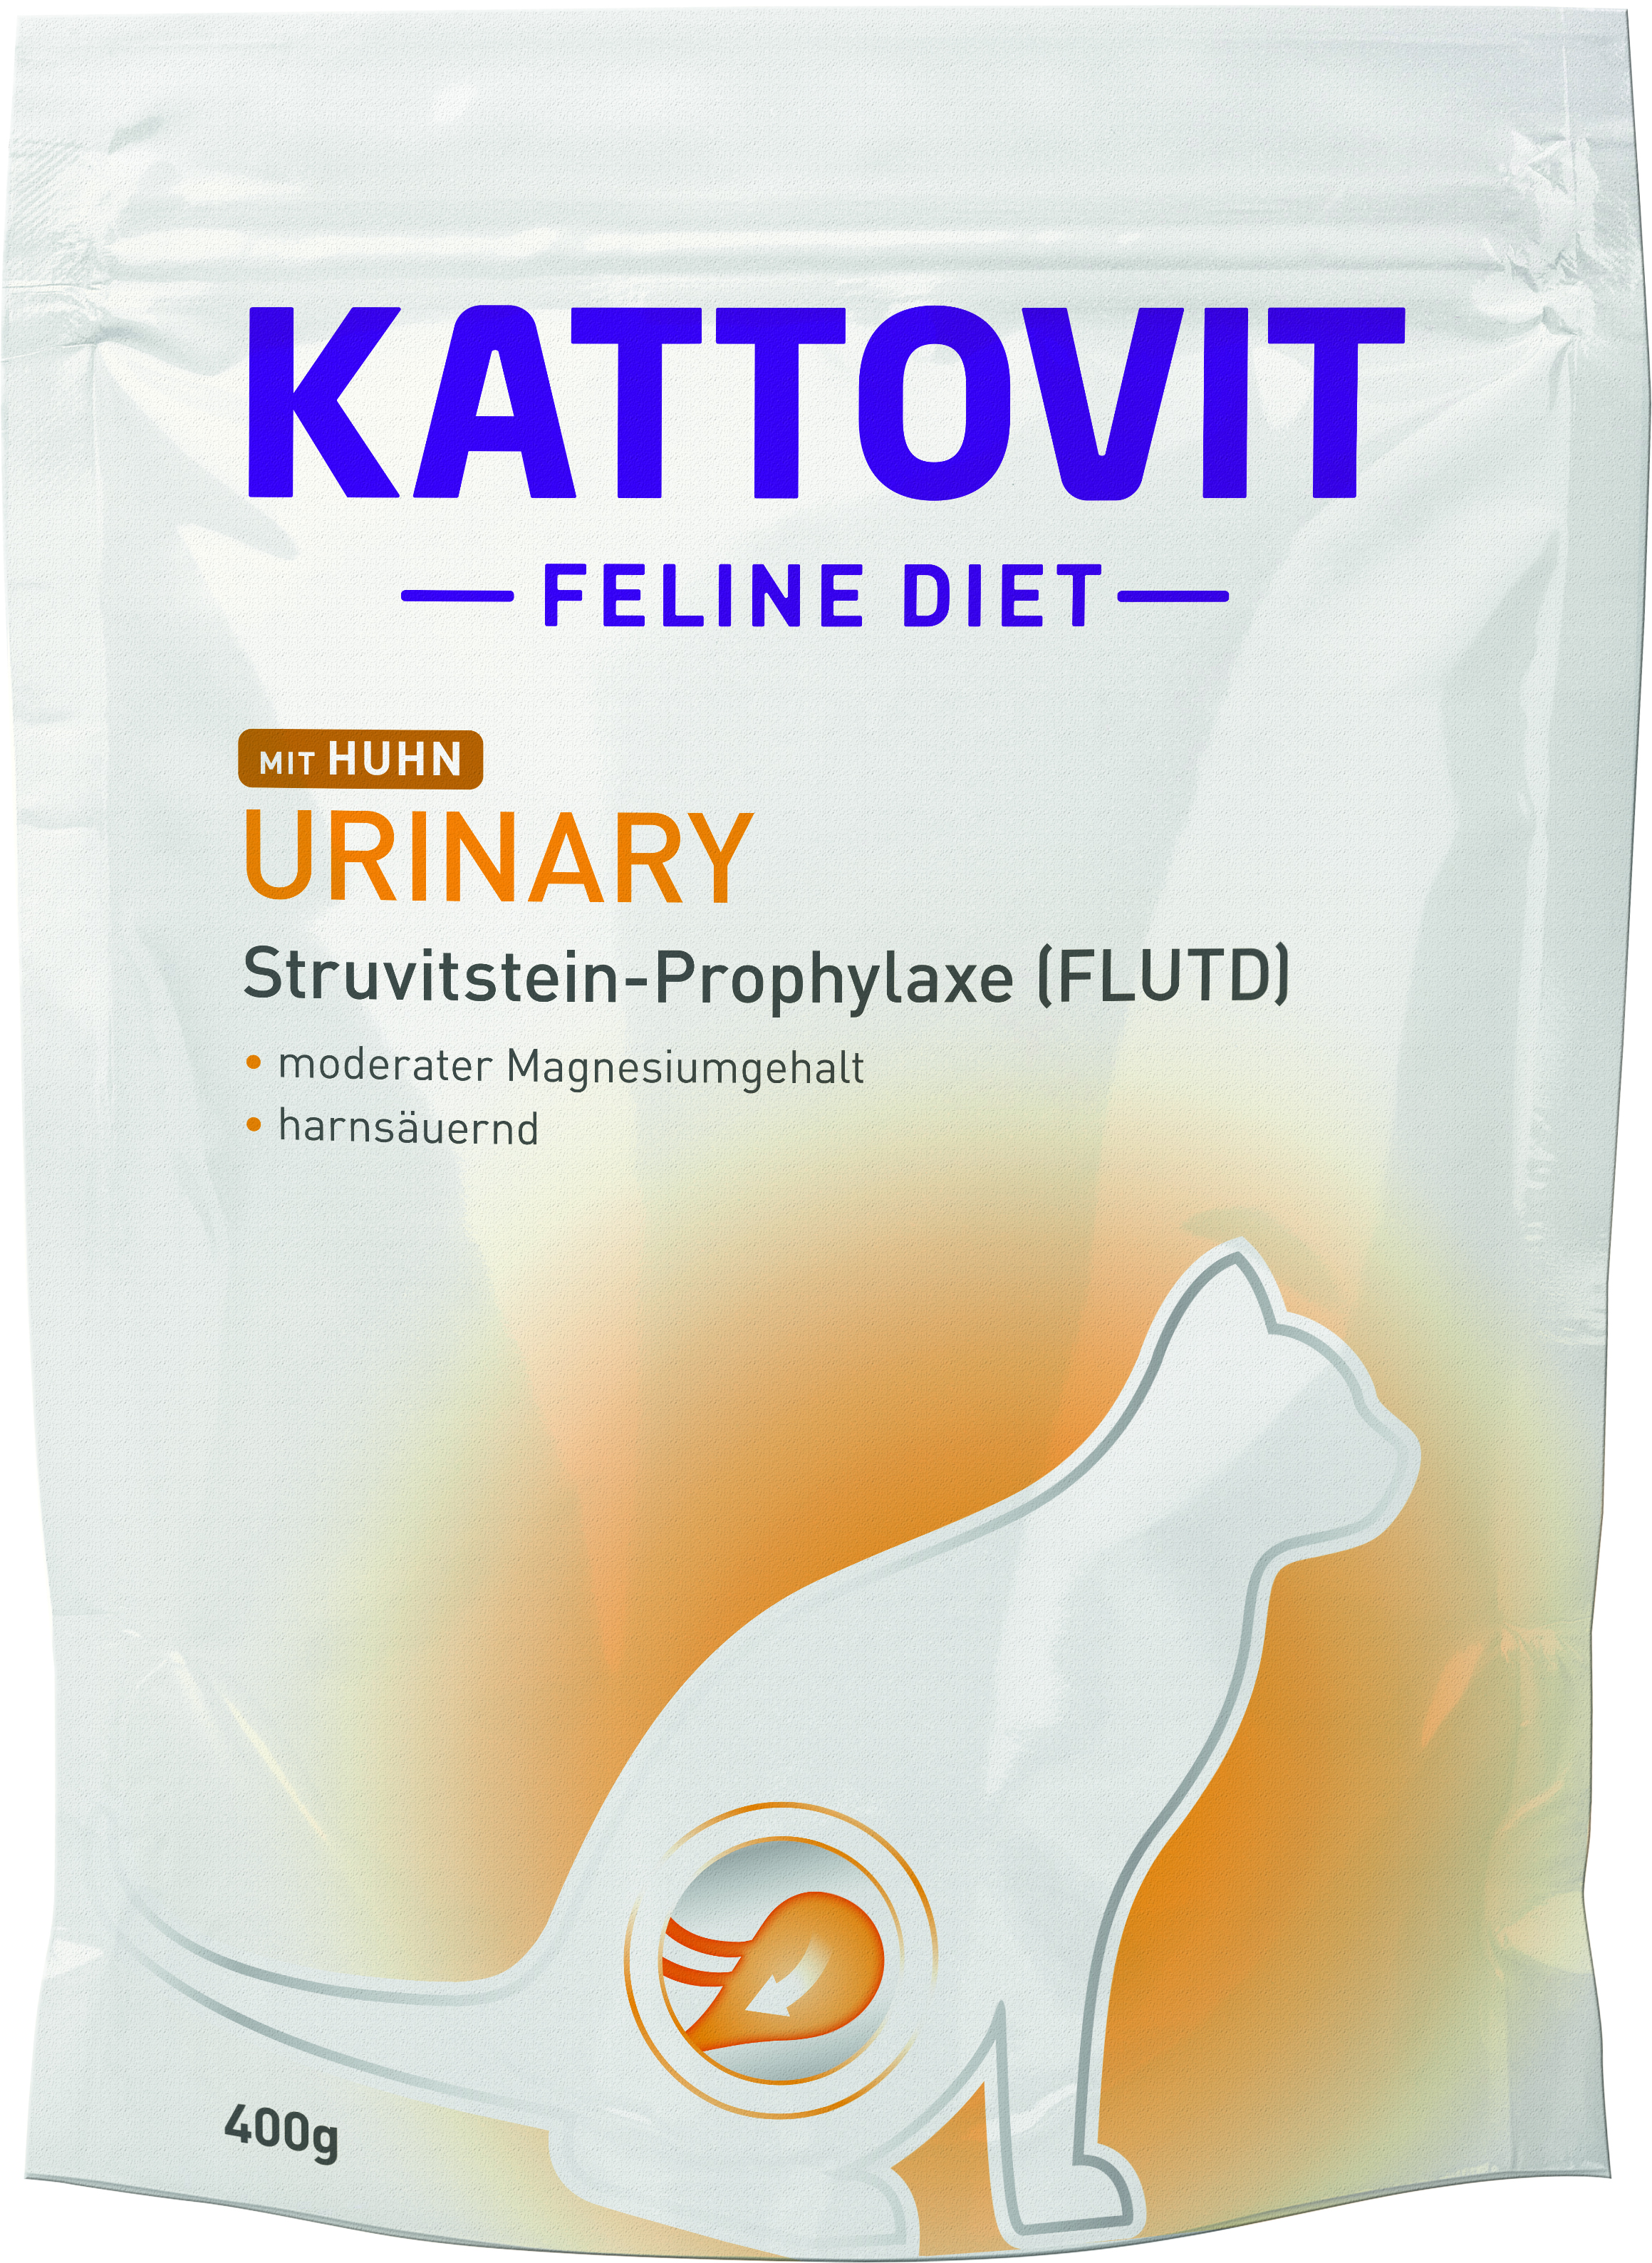 Kattovit Feline Diet Urinary Huhn 400g